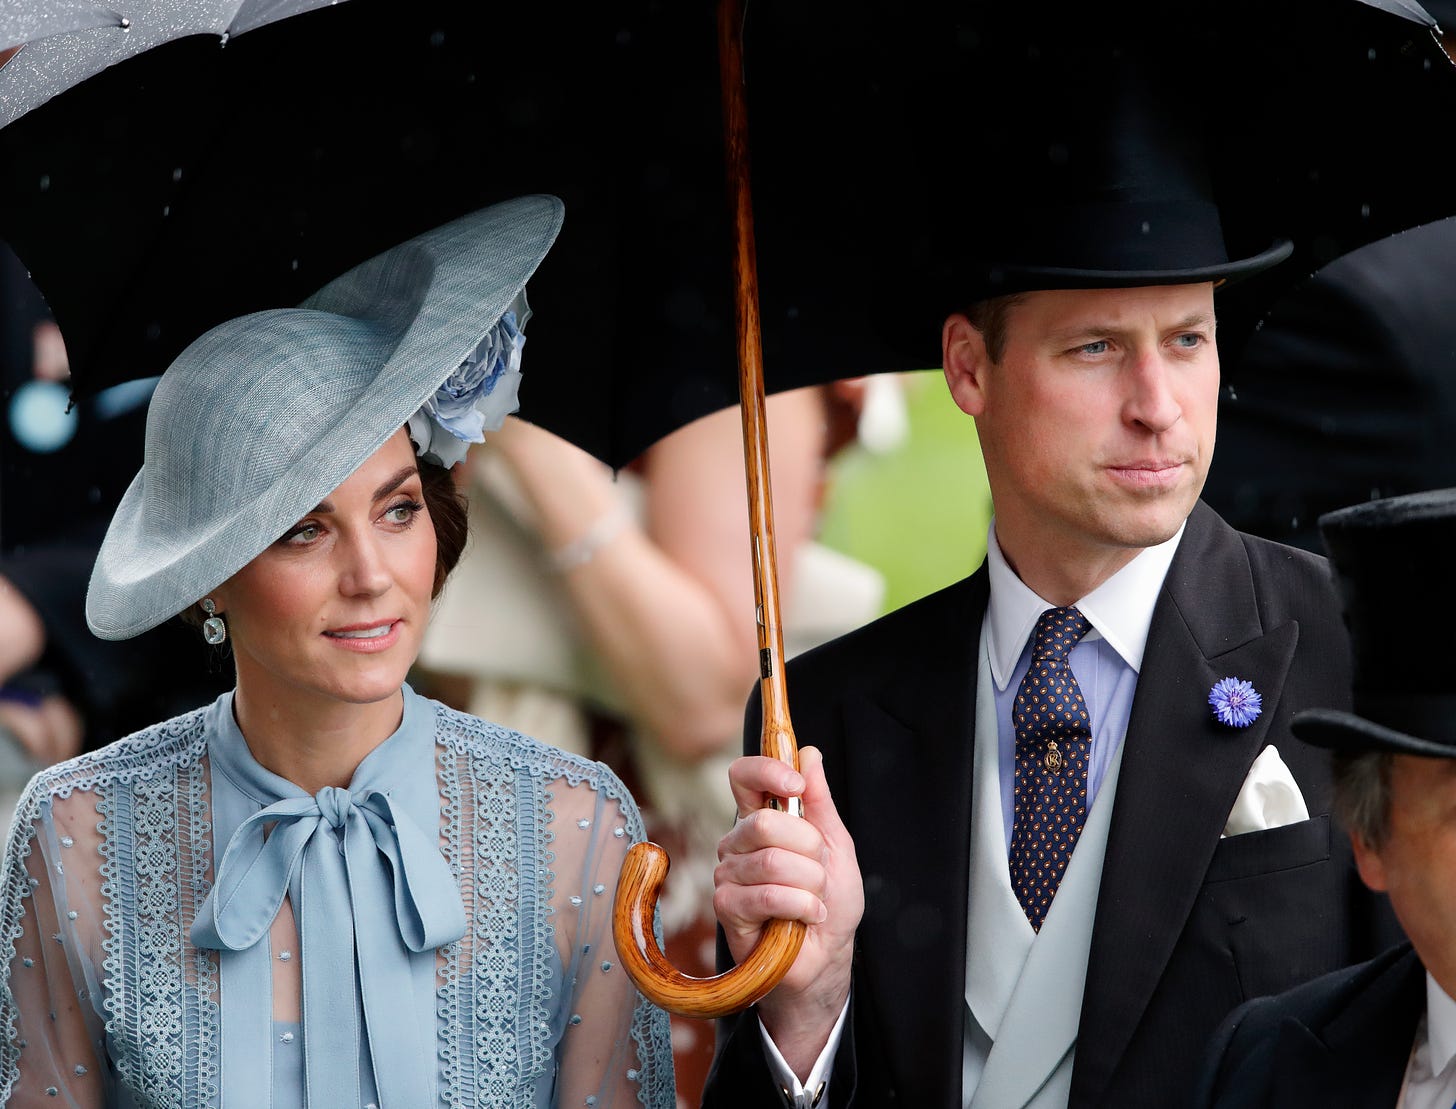 William and Kate under umbrella at Royal Ascot